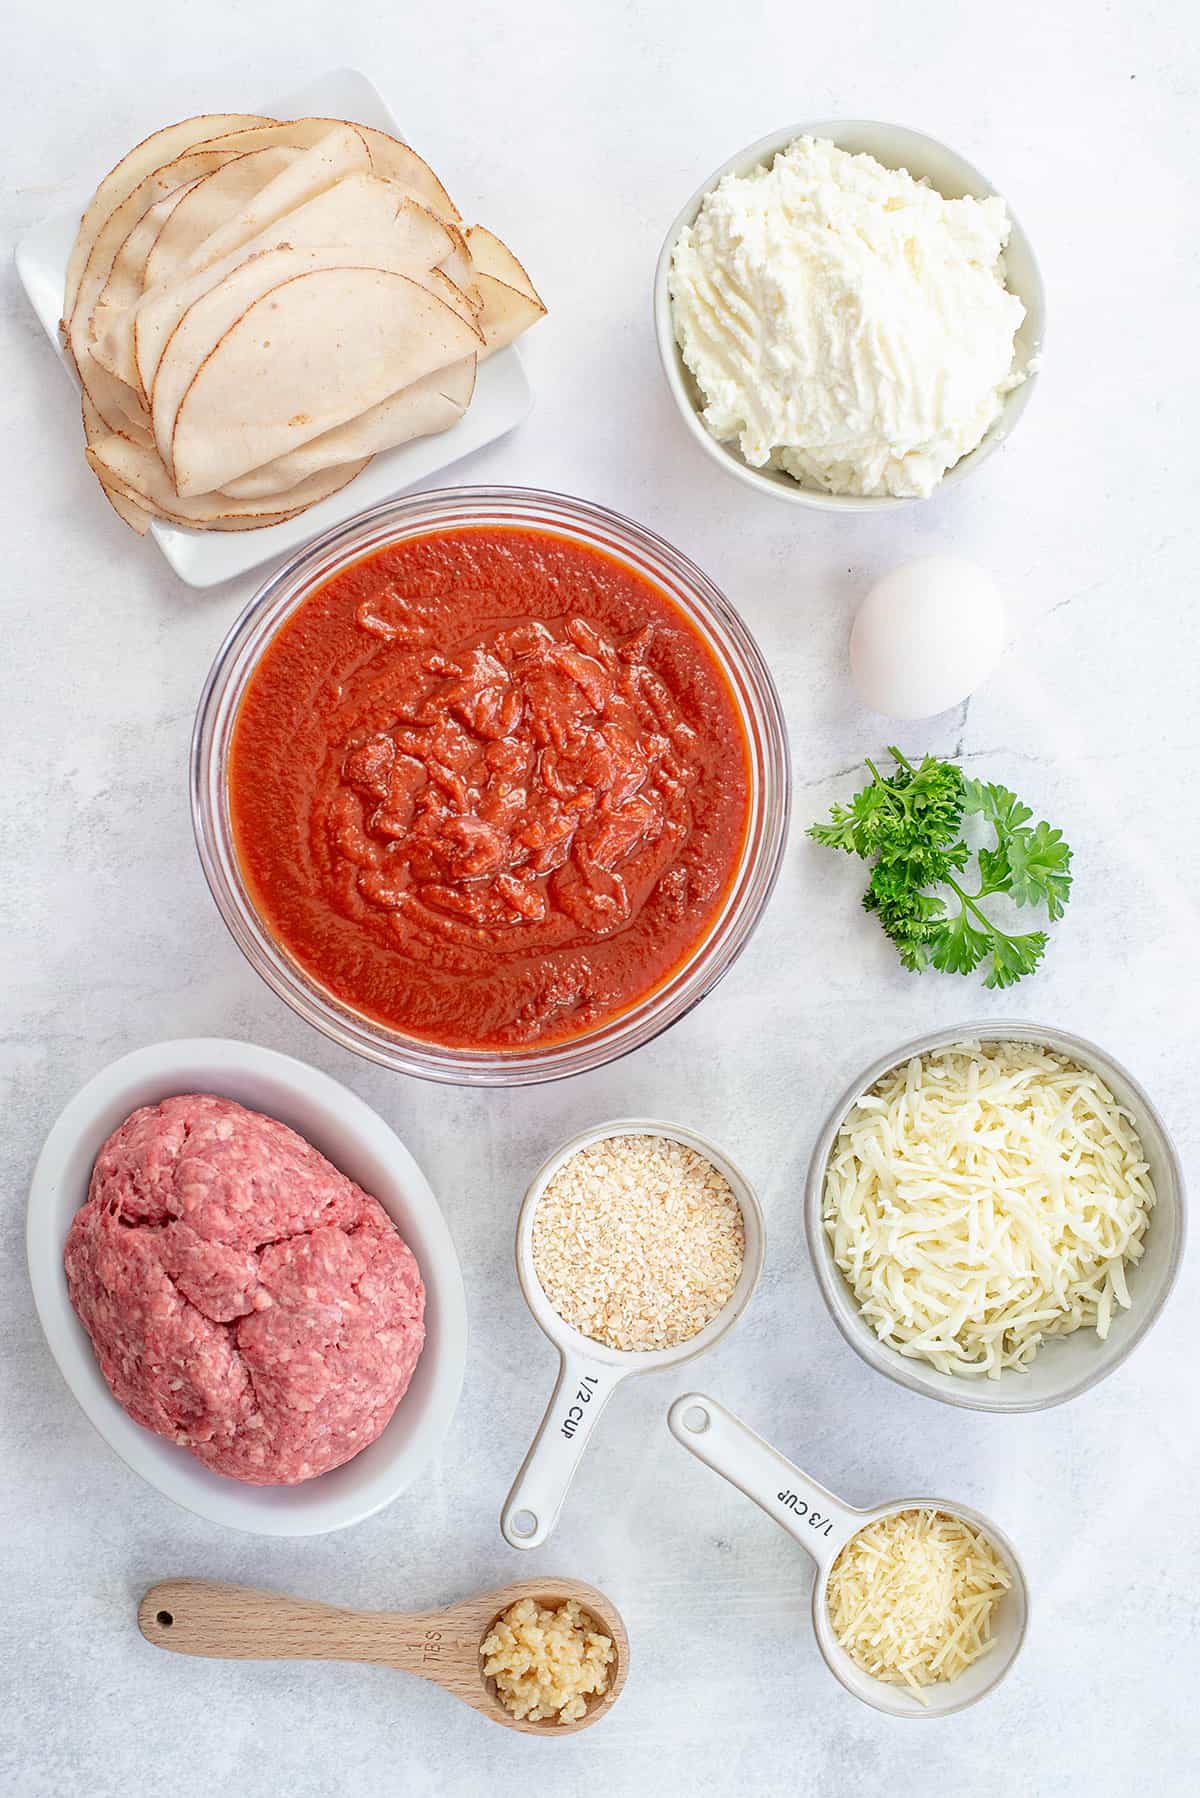 Ingredients for keto lasagna recipe.